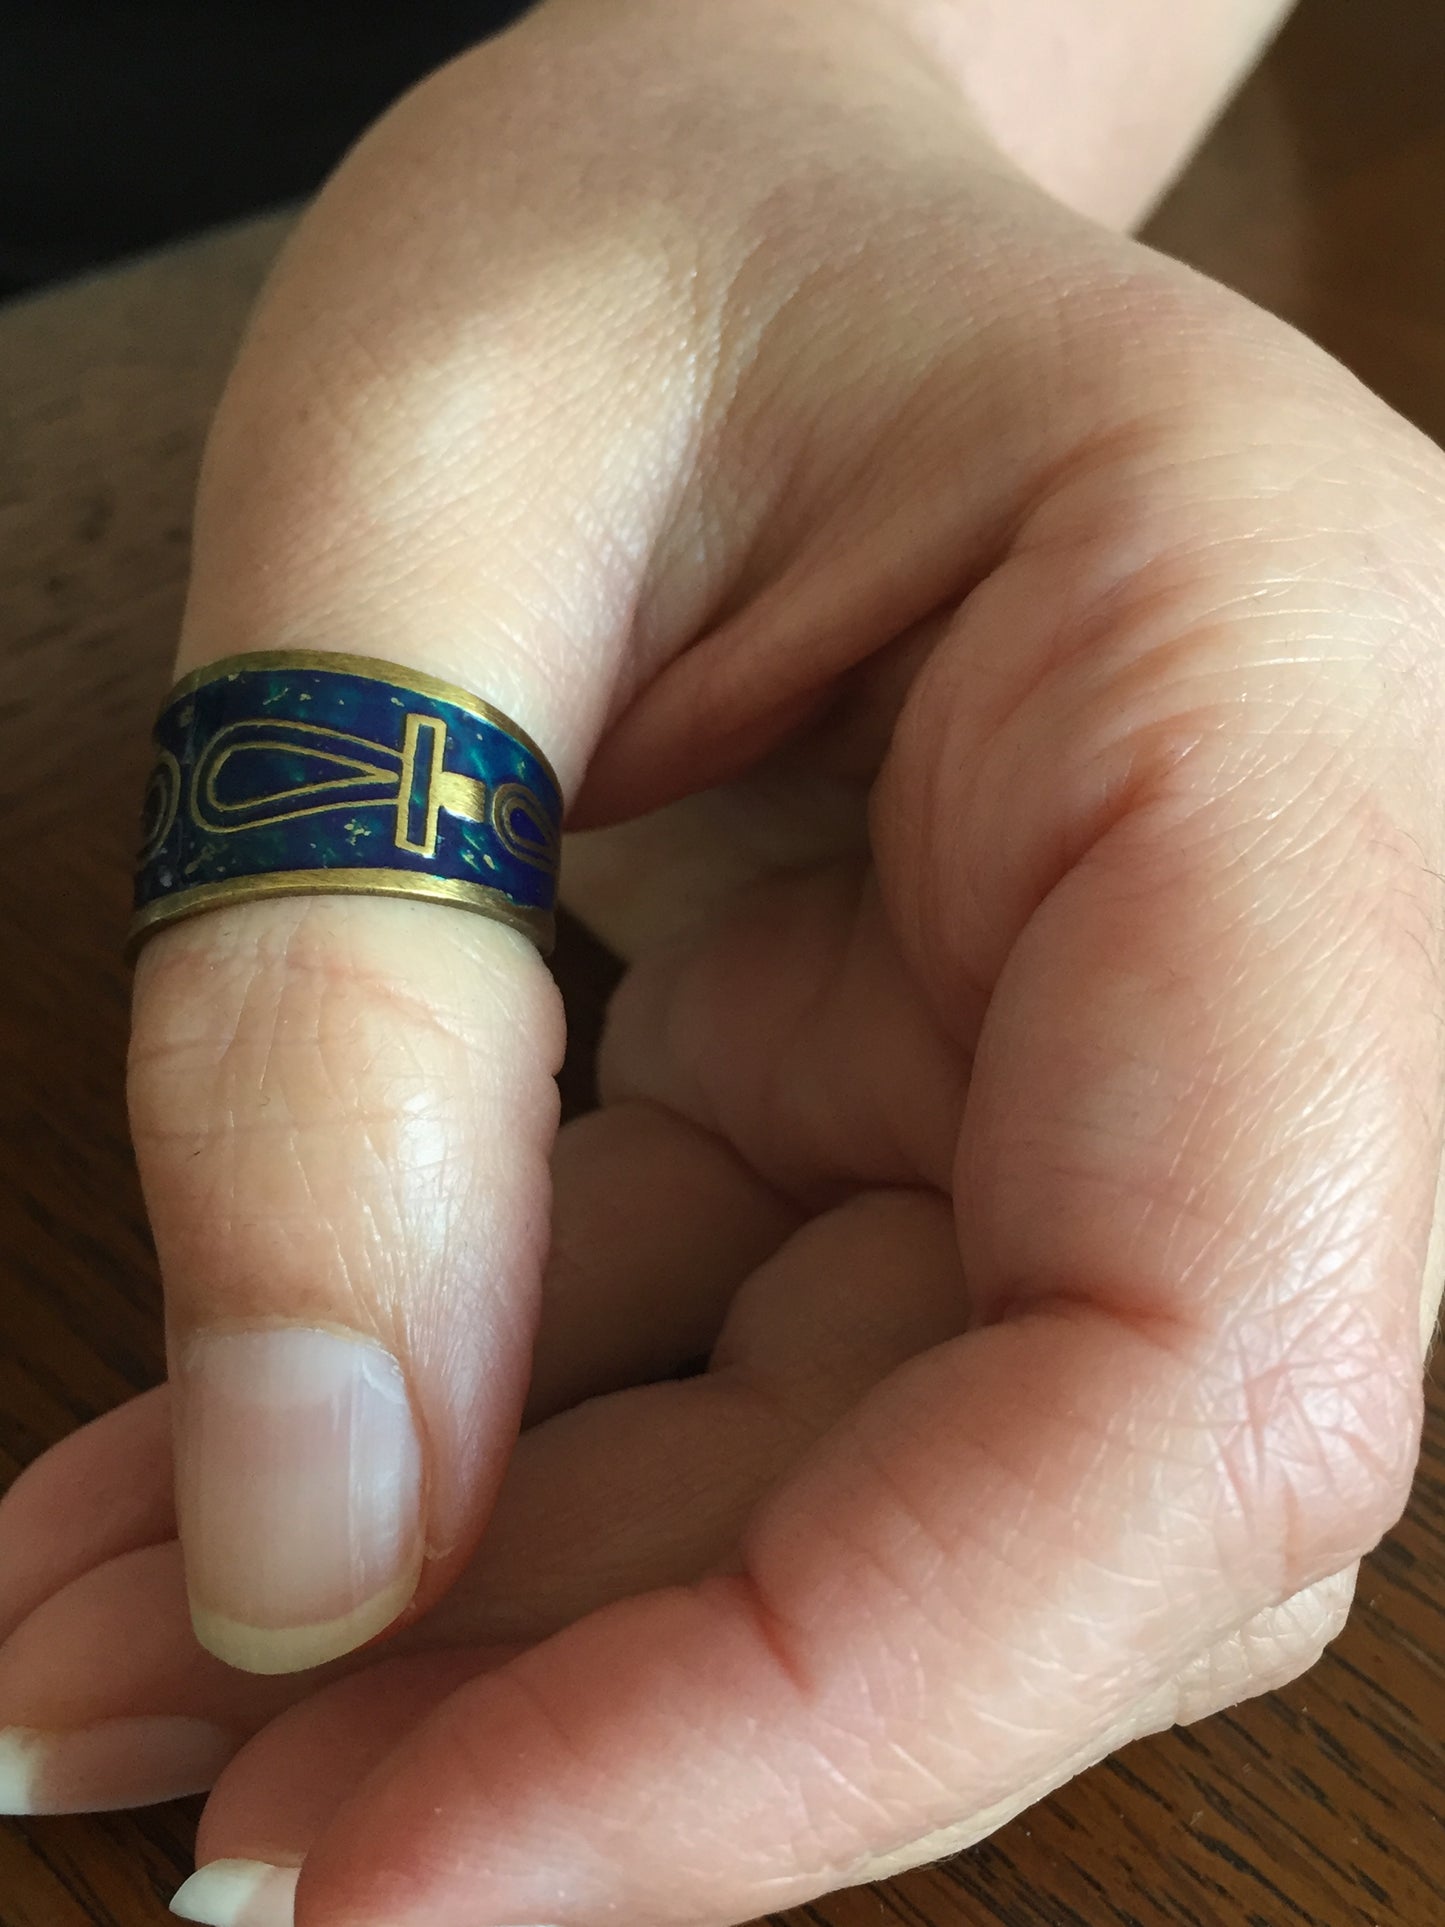 Handmade Copper Band Ring - Key of Life: Blue